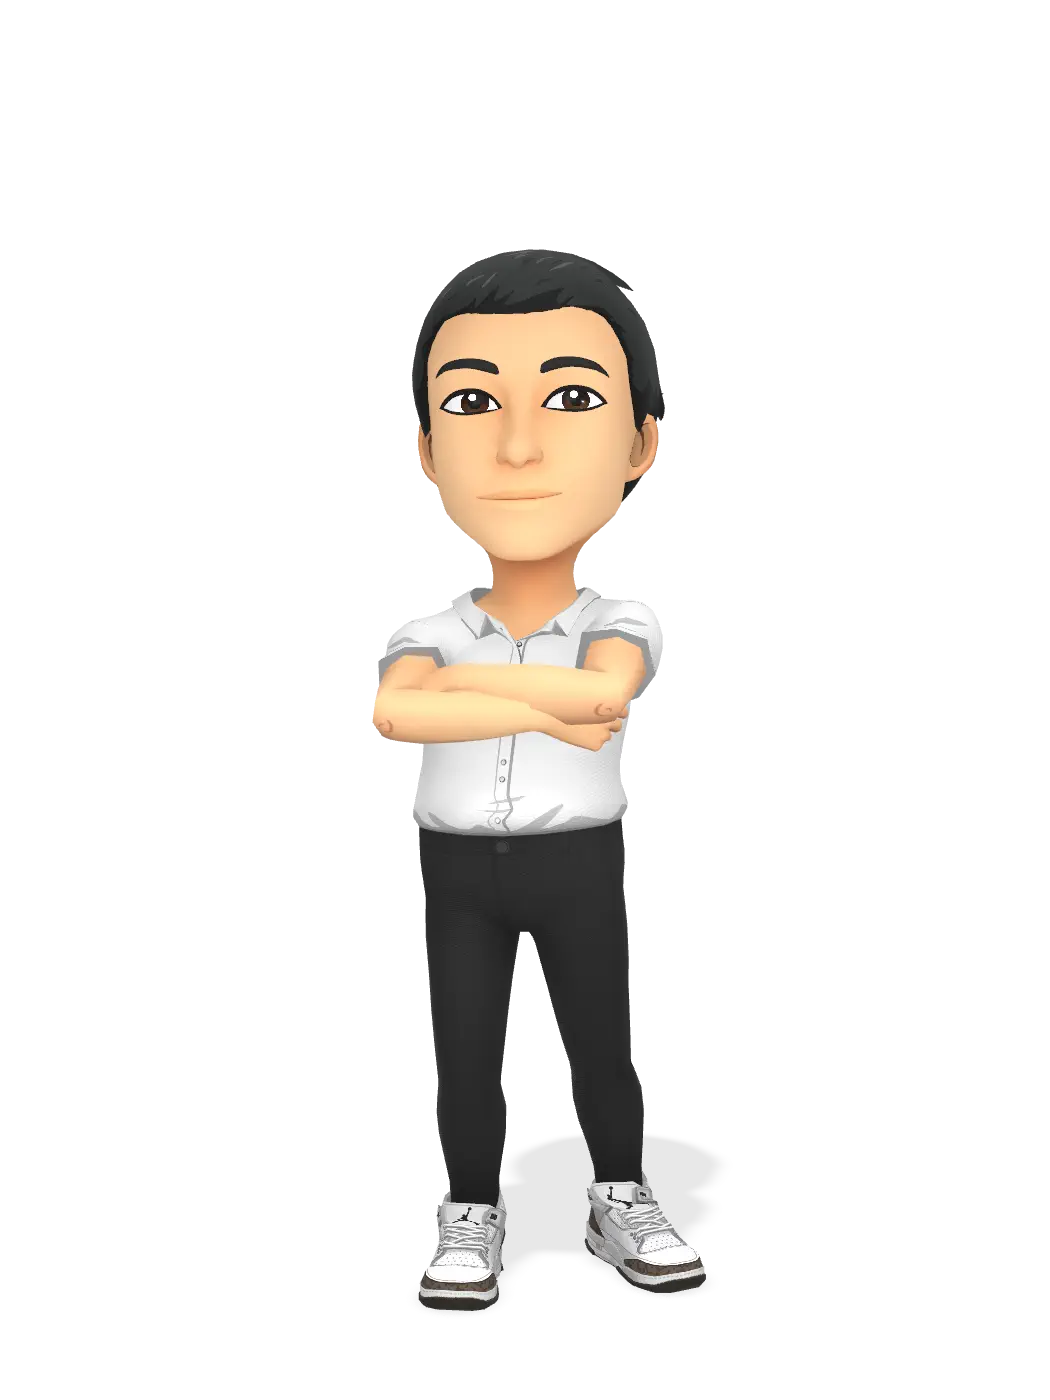 3D Bitmoji for matteoleb avatar